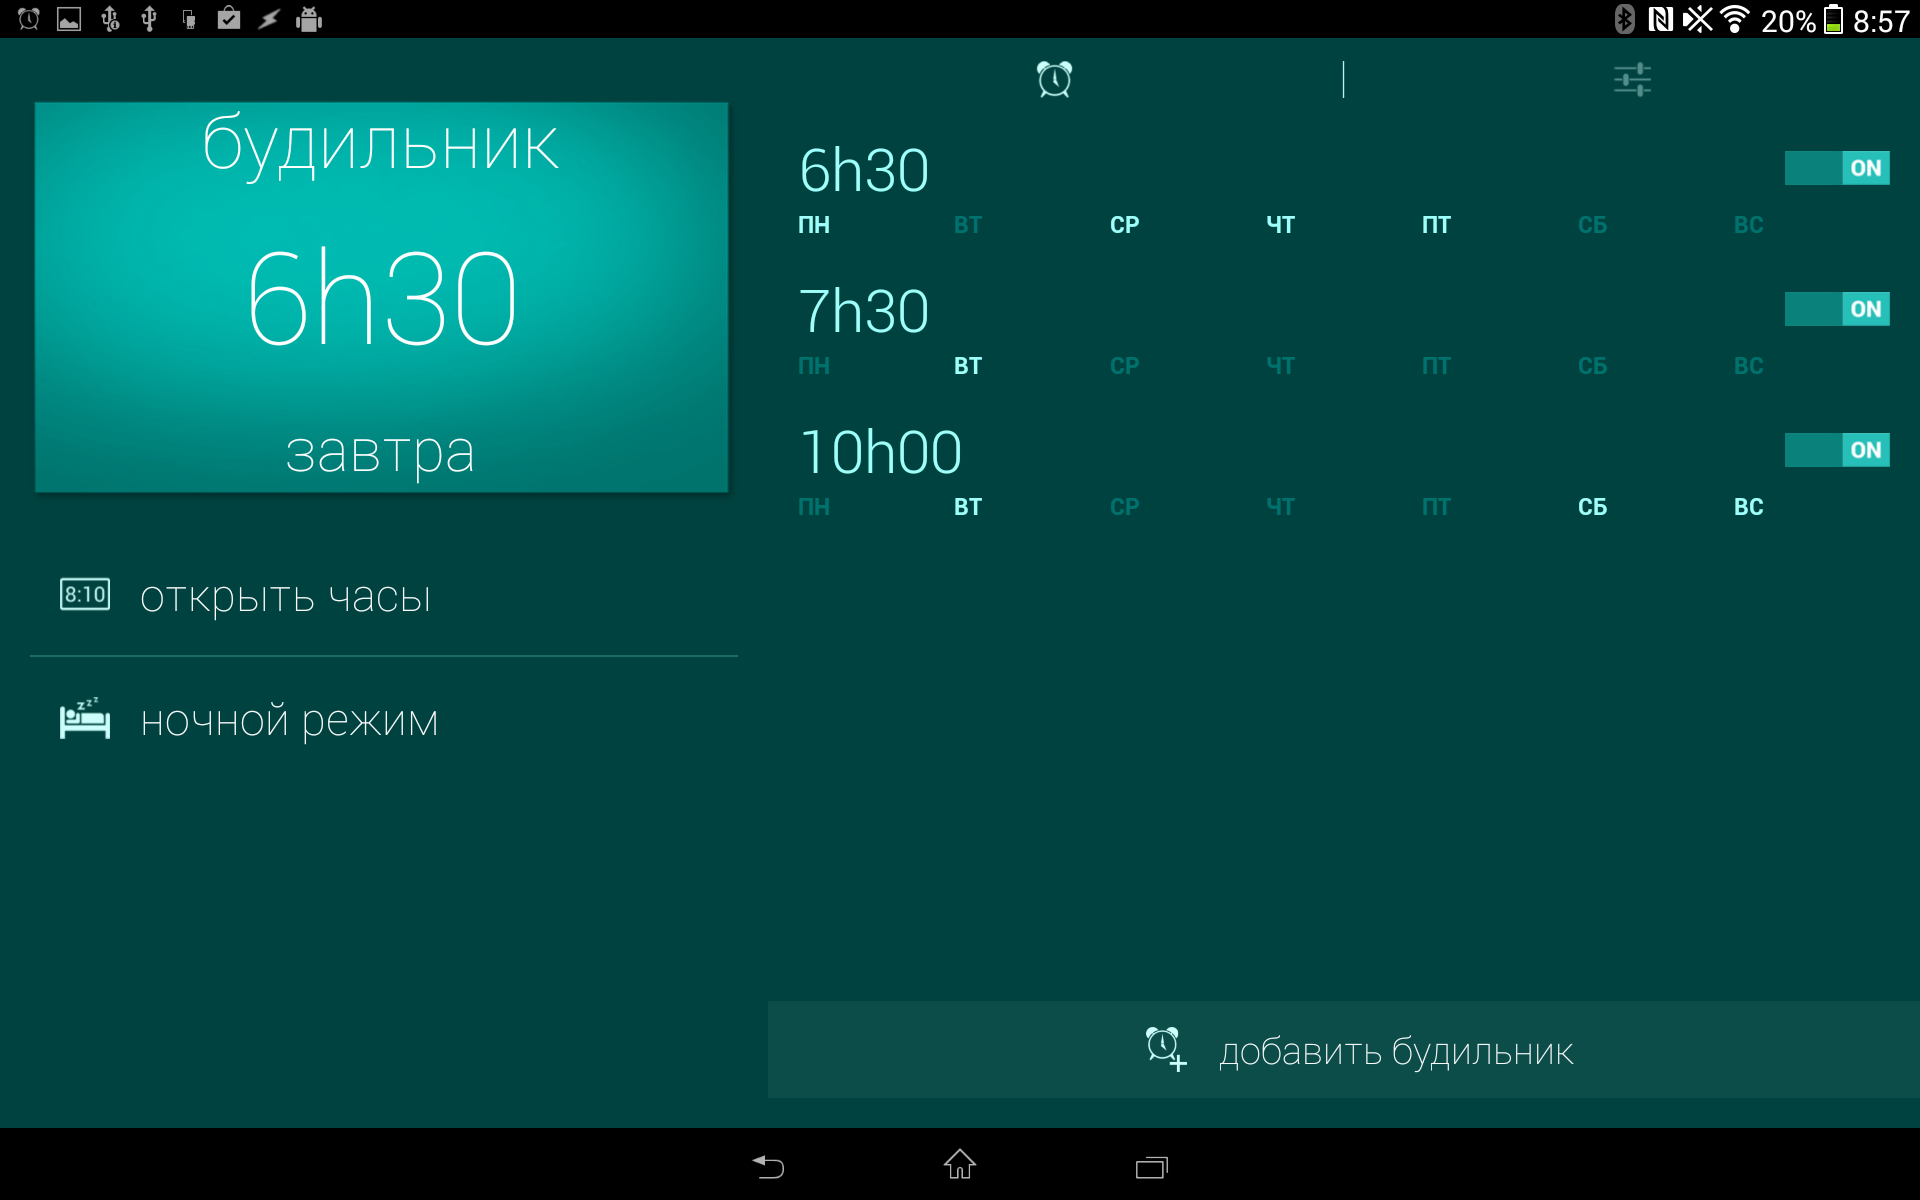 Android application Glimmer (luminous alarm clock) screenshort